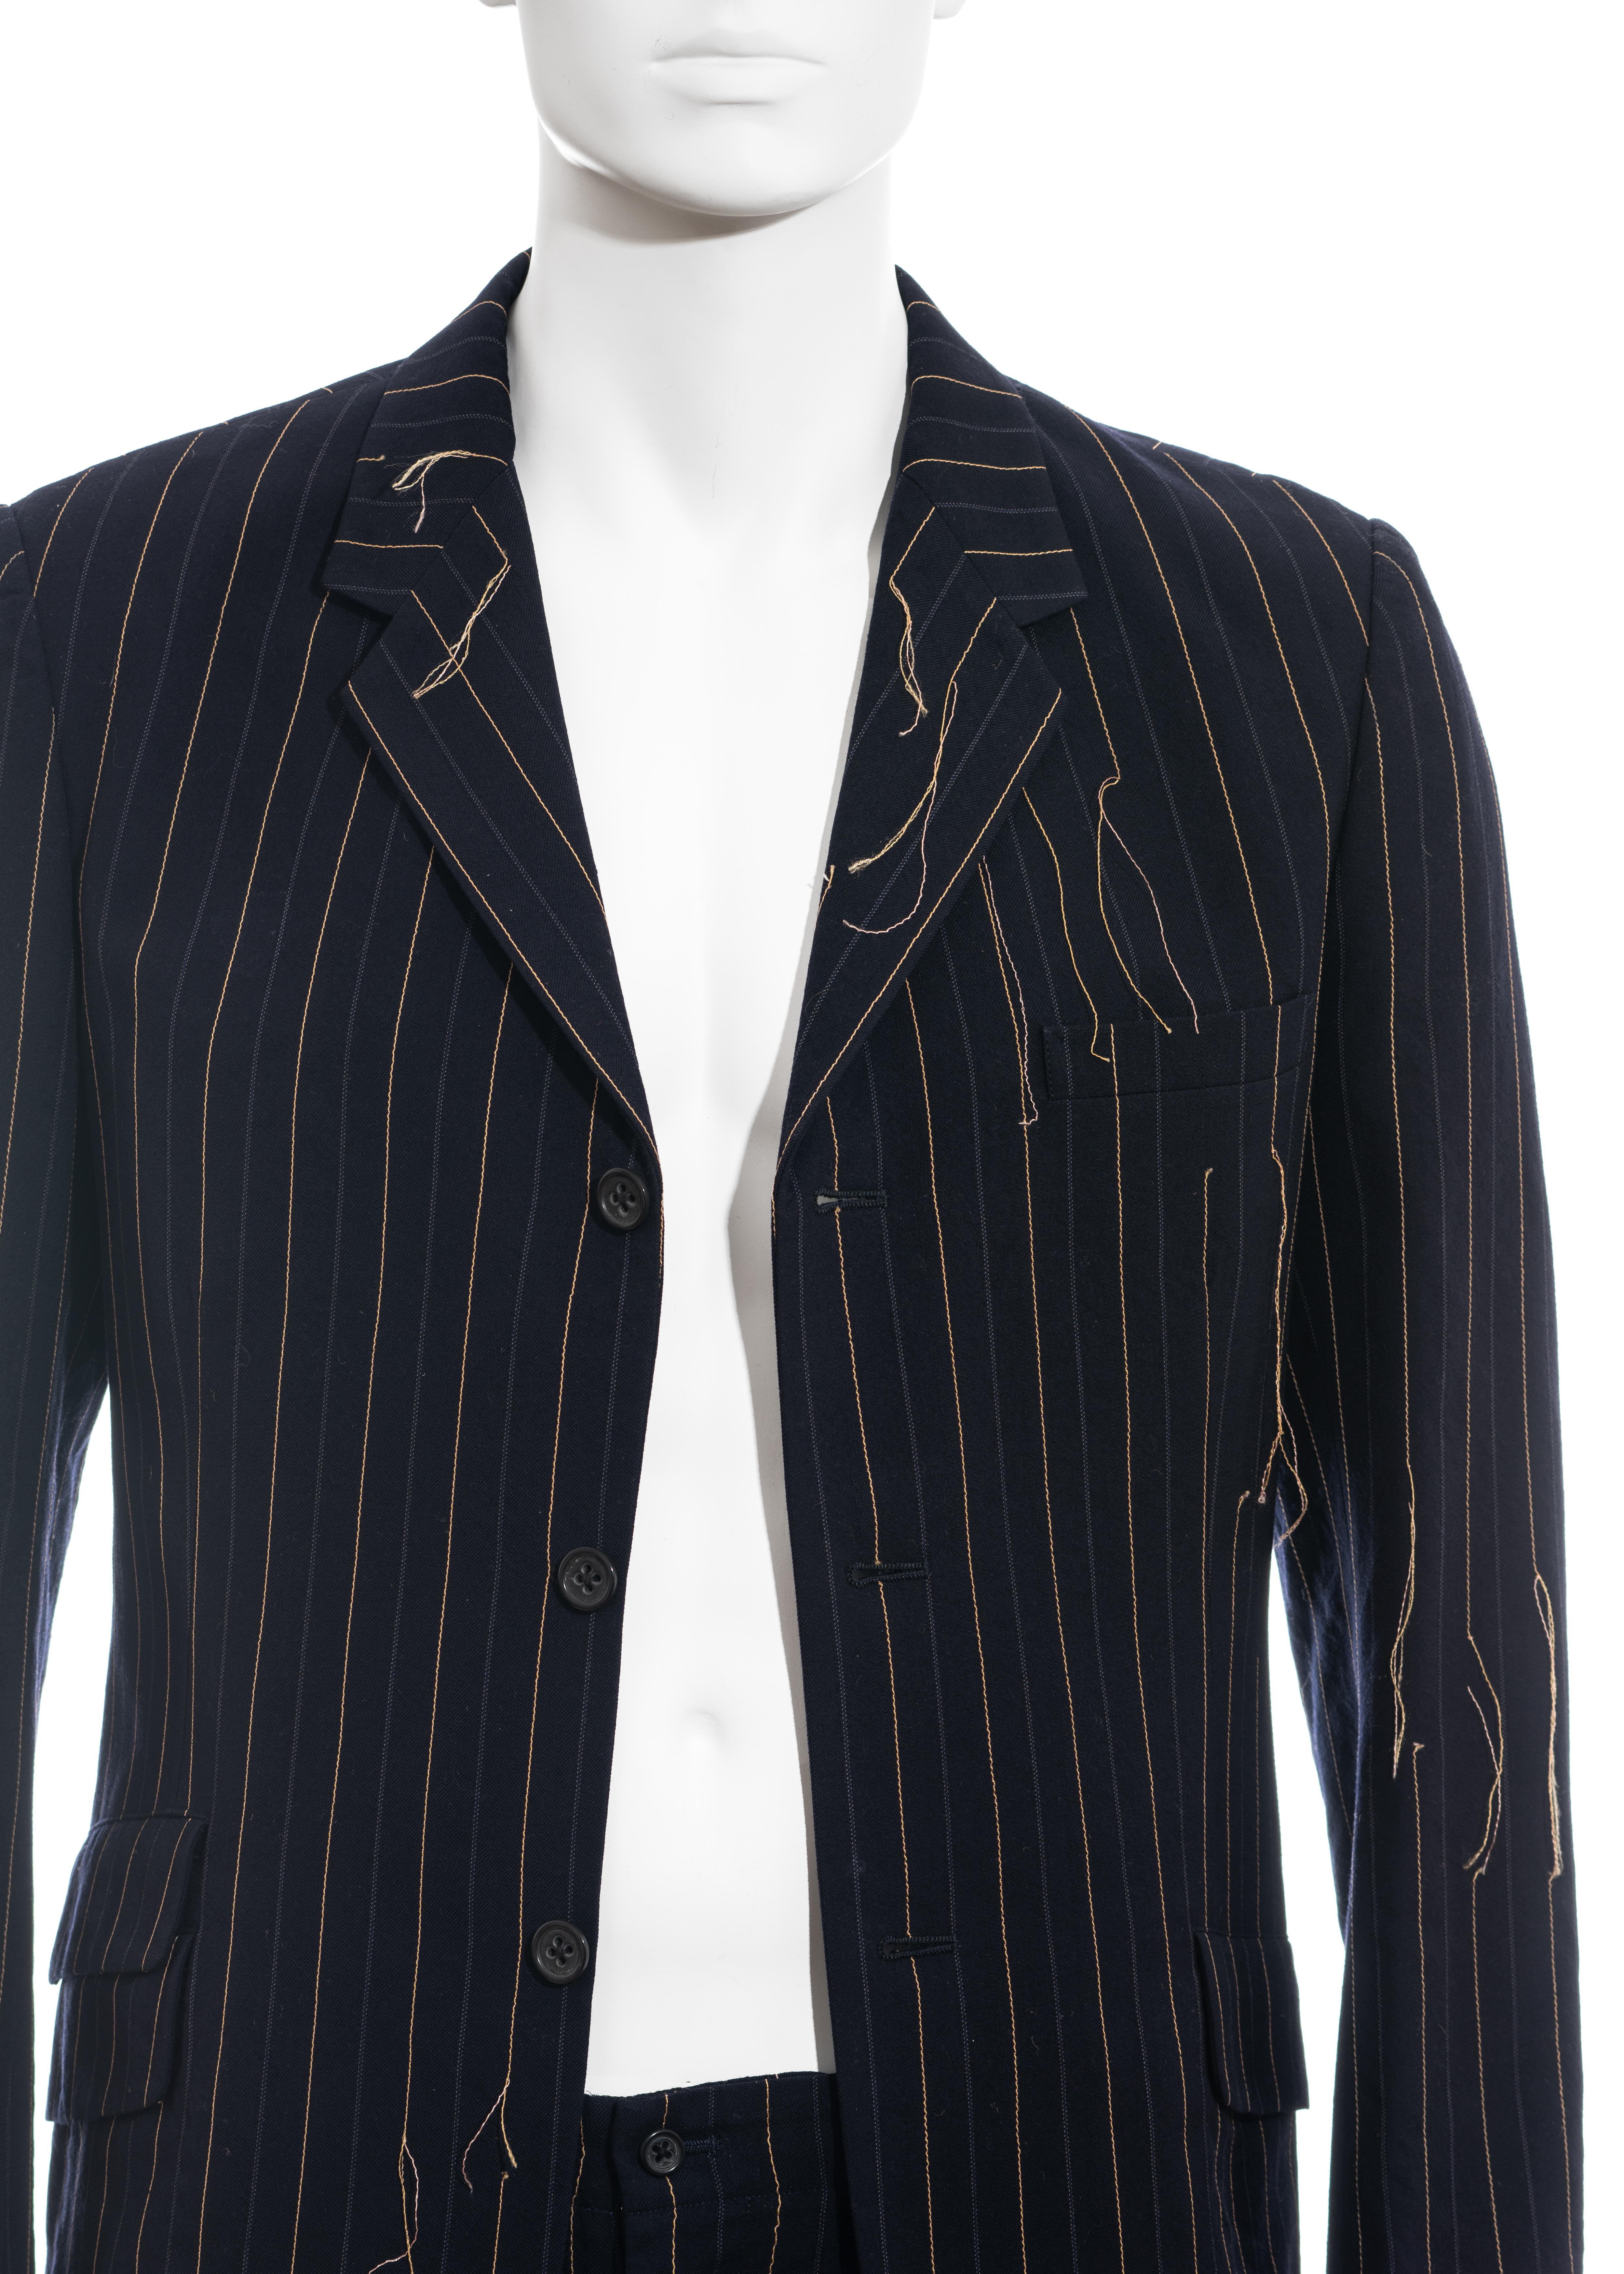 Men's Yohji Yamamoto navy frayed pinstriped wool suit, fw 2003 For Sale 1